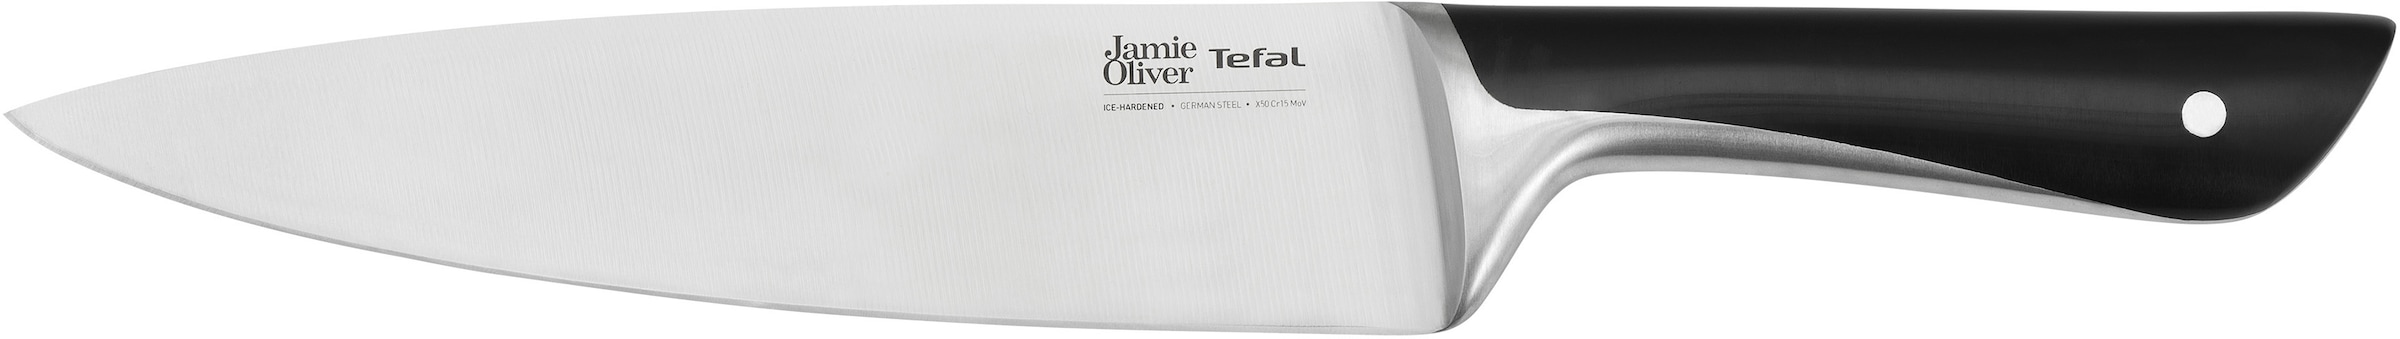 Tefal Kochmesser "Jamie Oliver K26701", (1 tlg.), hohe Leistung, unverwechselbares Design, widerstandsfähig/langlebig